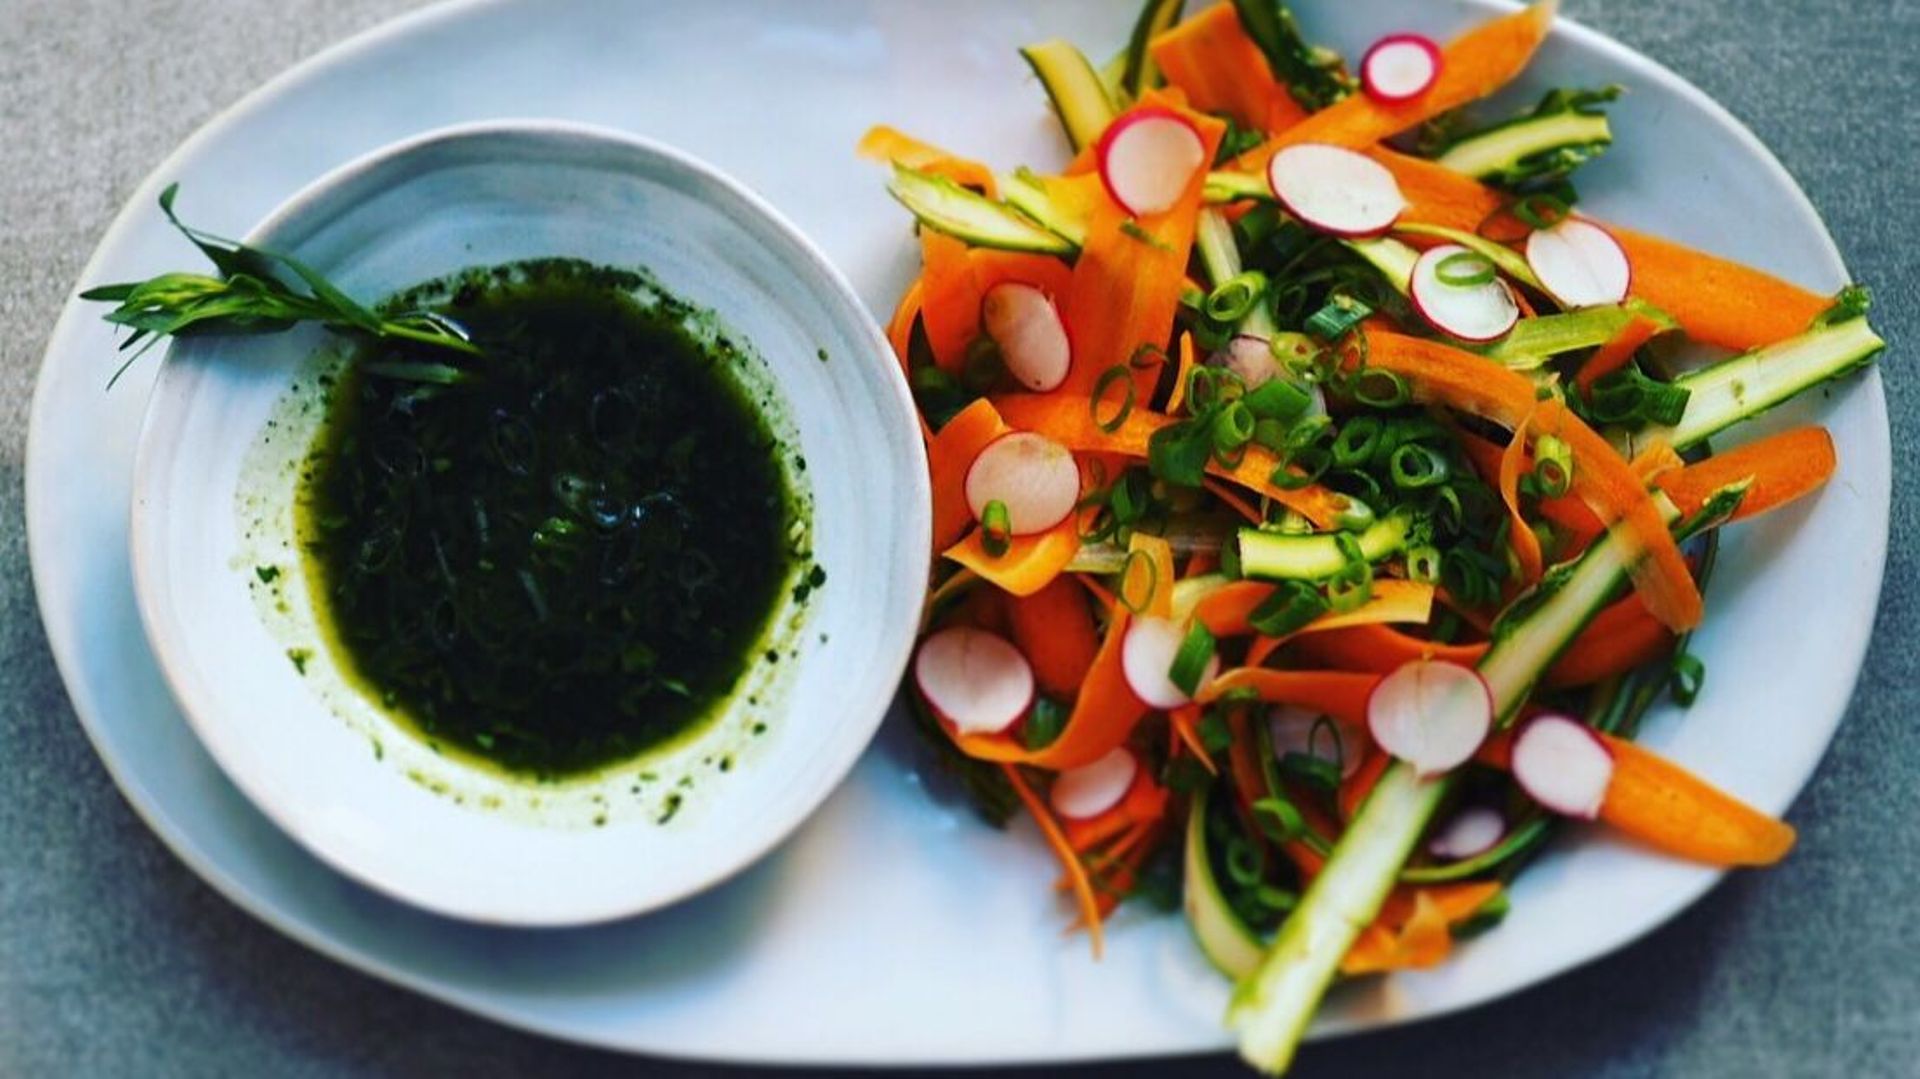 Salad Bar : salade de légumes printaniers